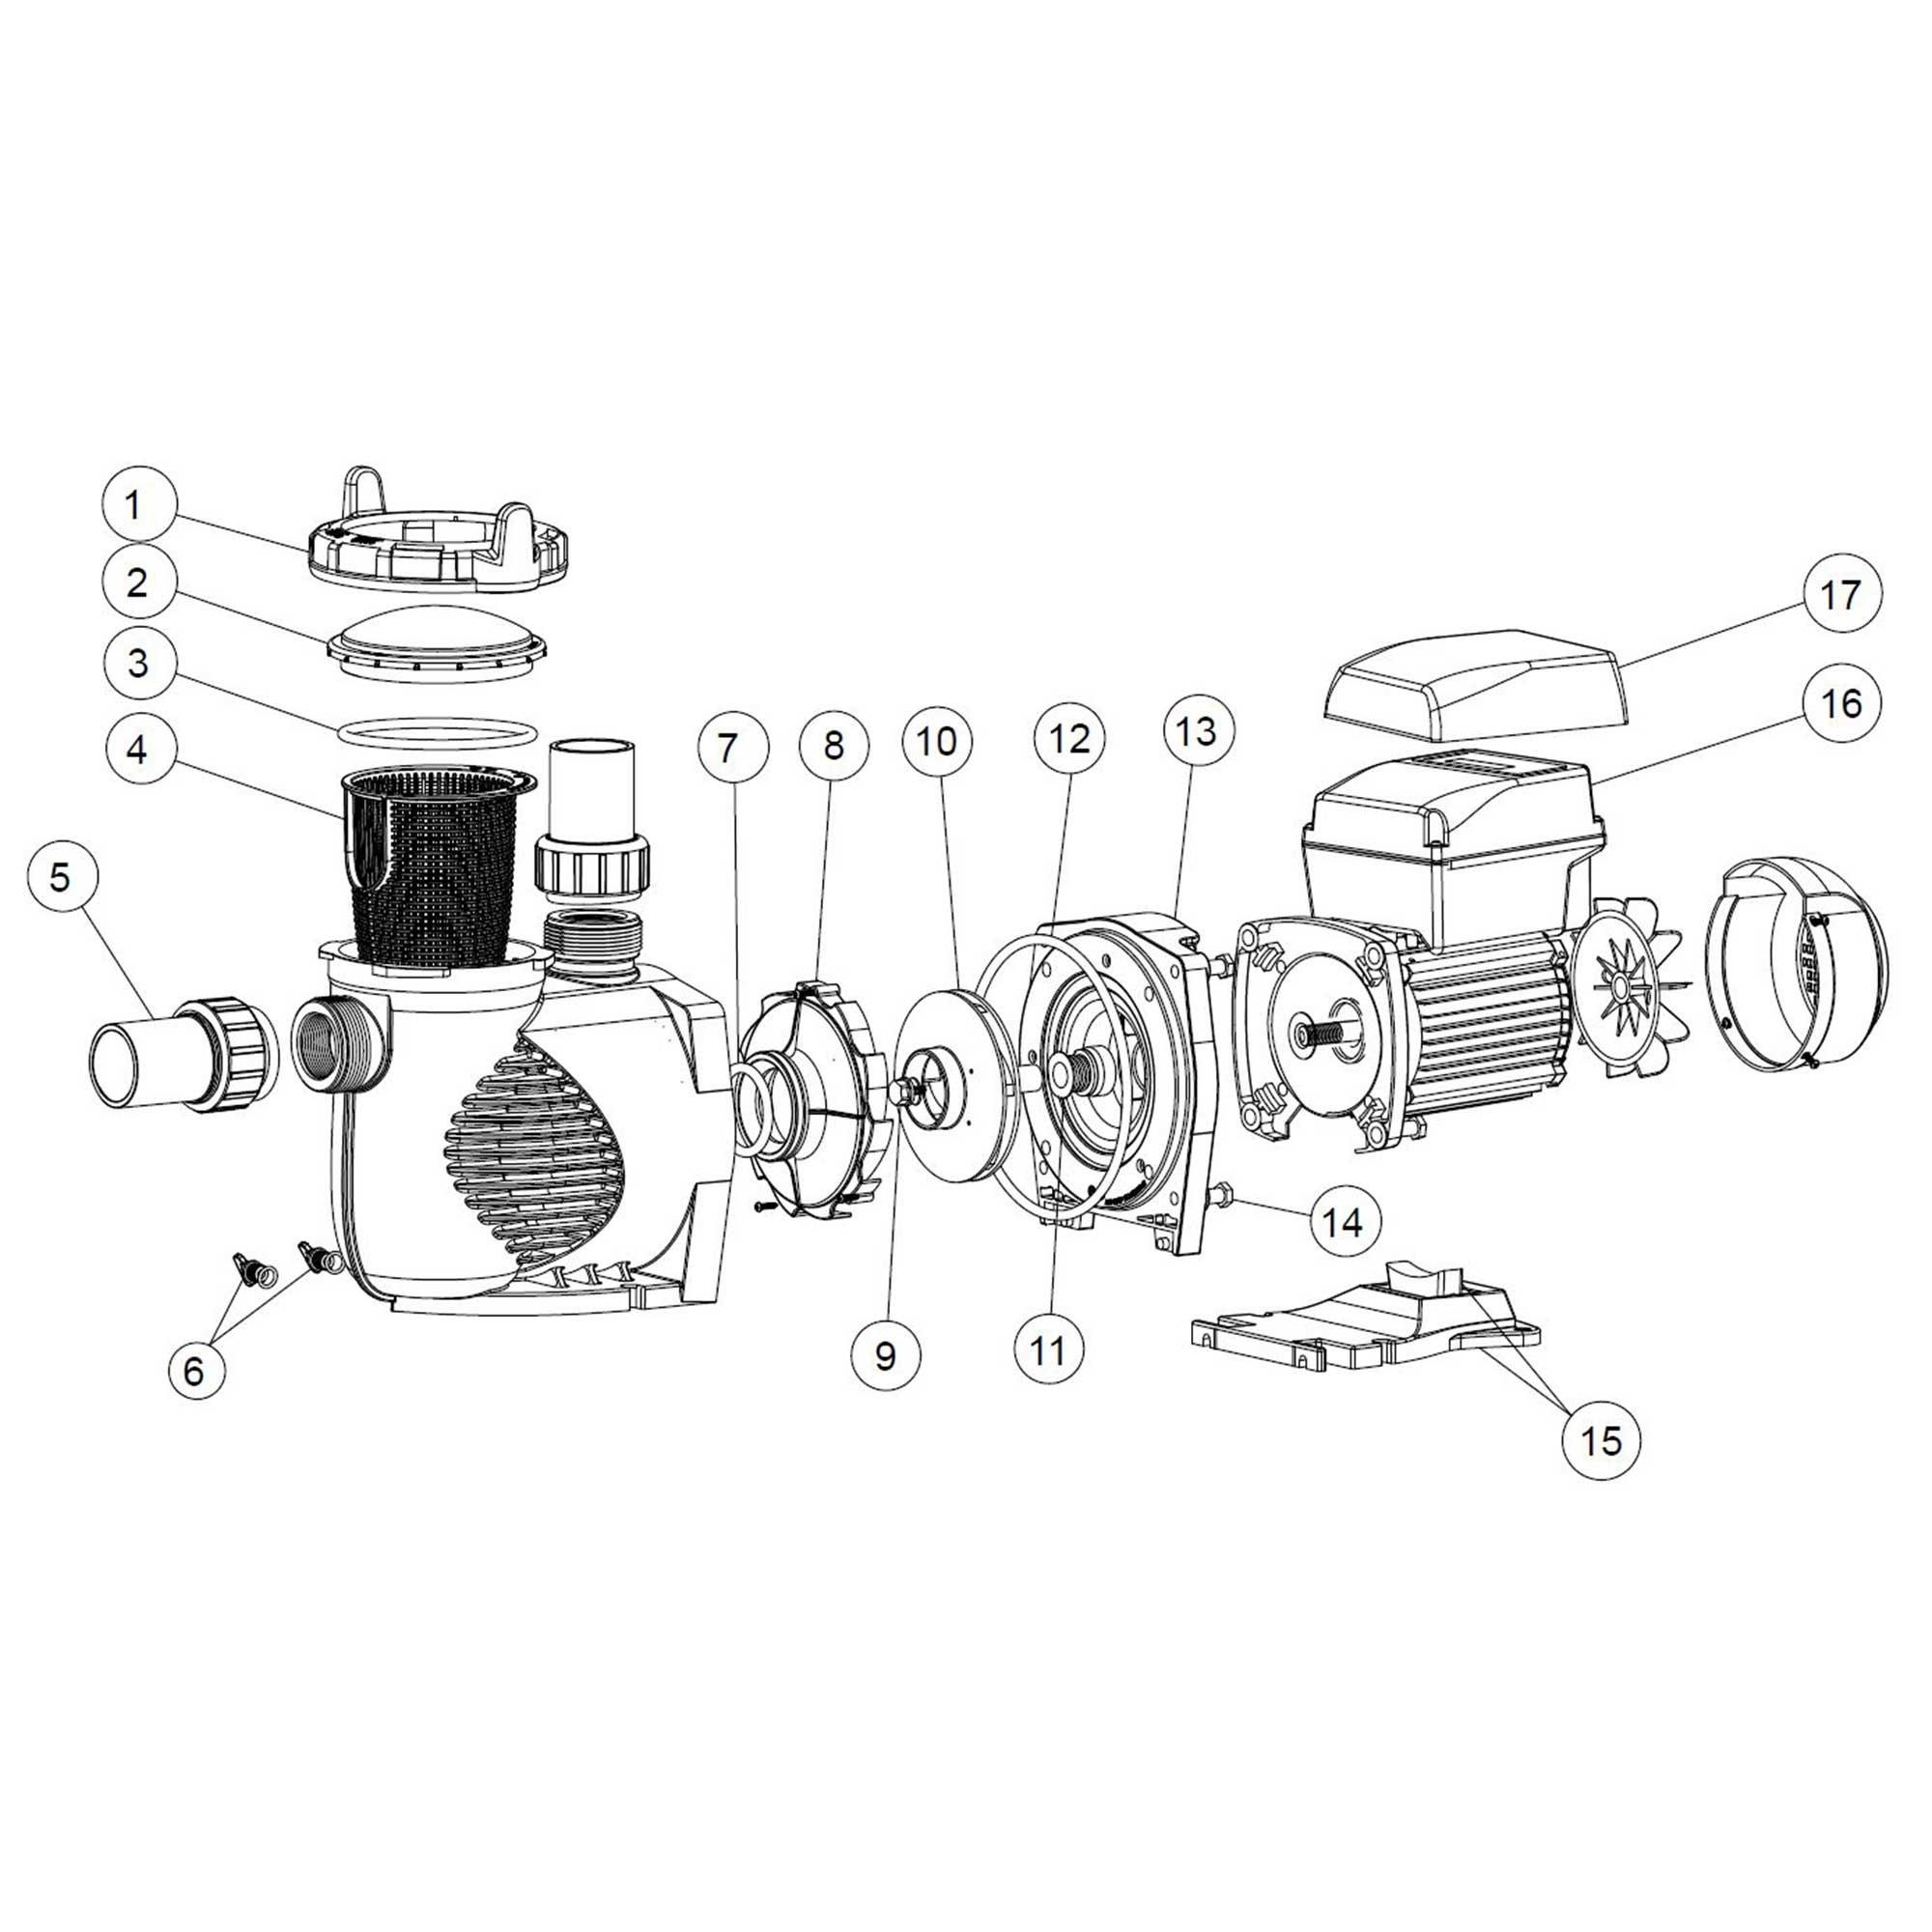 Protege RPVSP1 Variable Speed Pool Pump Parts